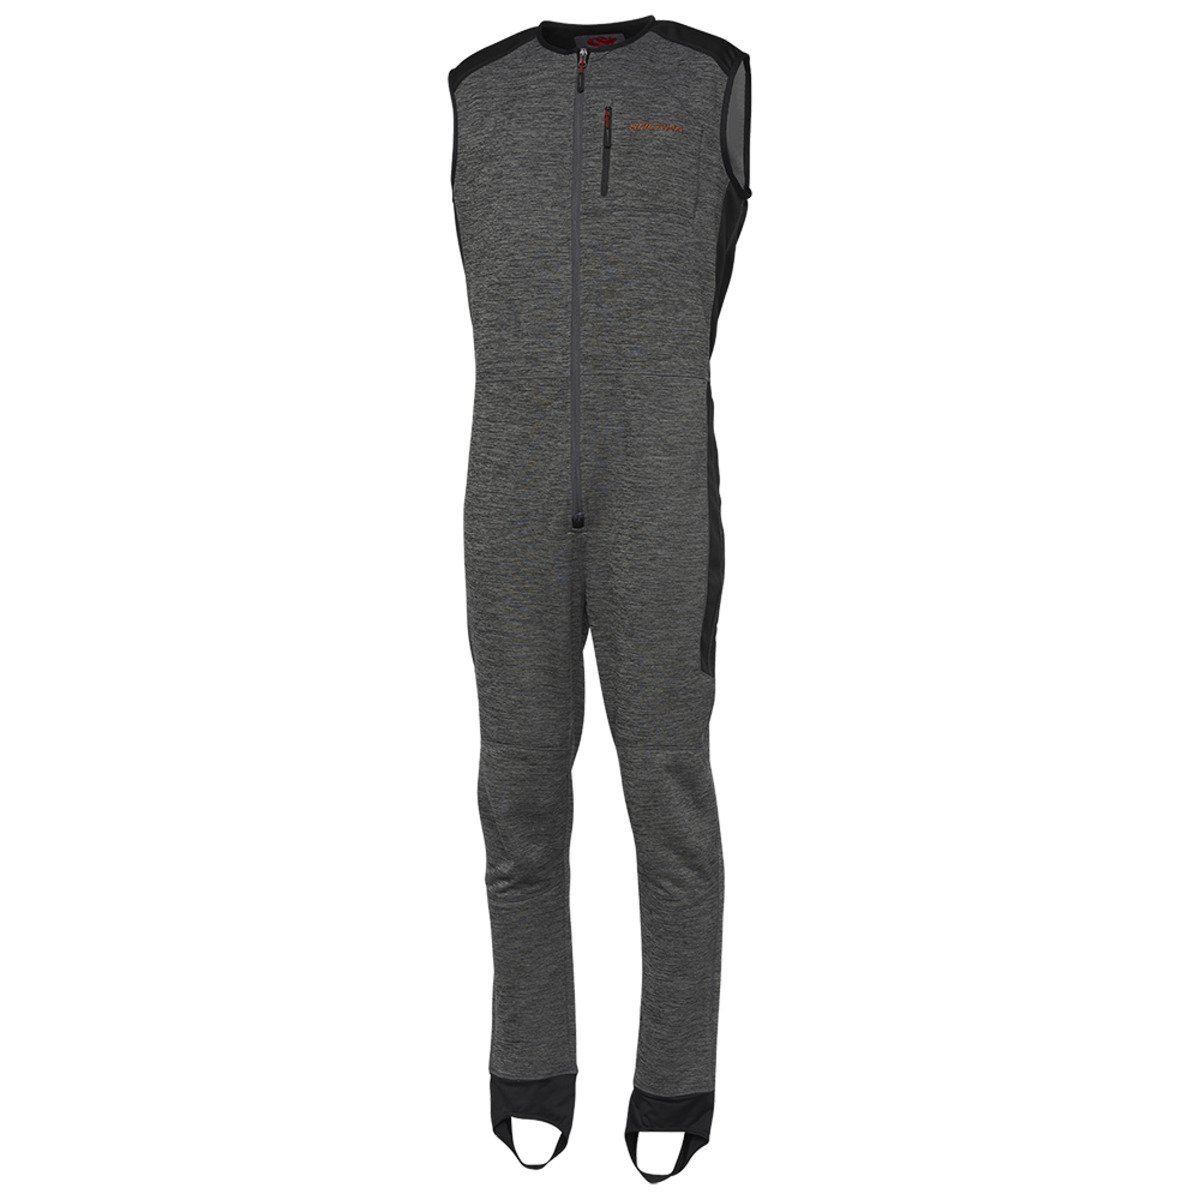 Scierra Insulated Body Suit - S PEWTER GREY MELANGE